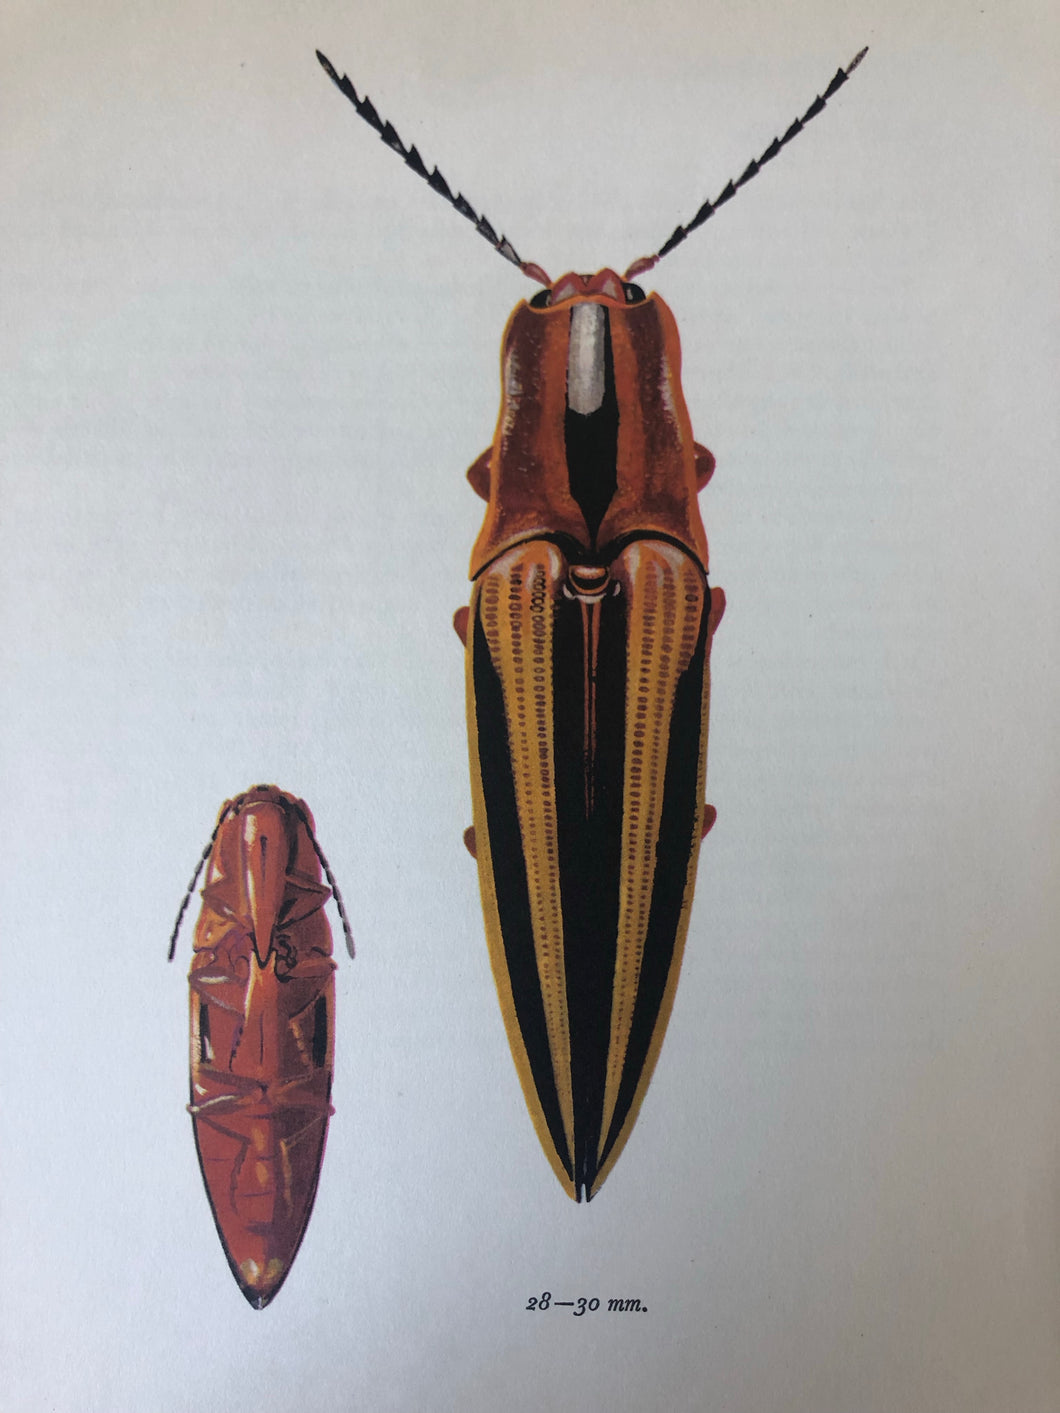 1960s Beetle Print, Click Beetle